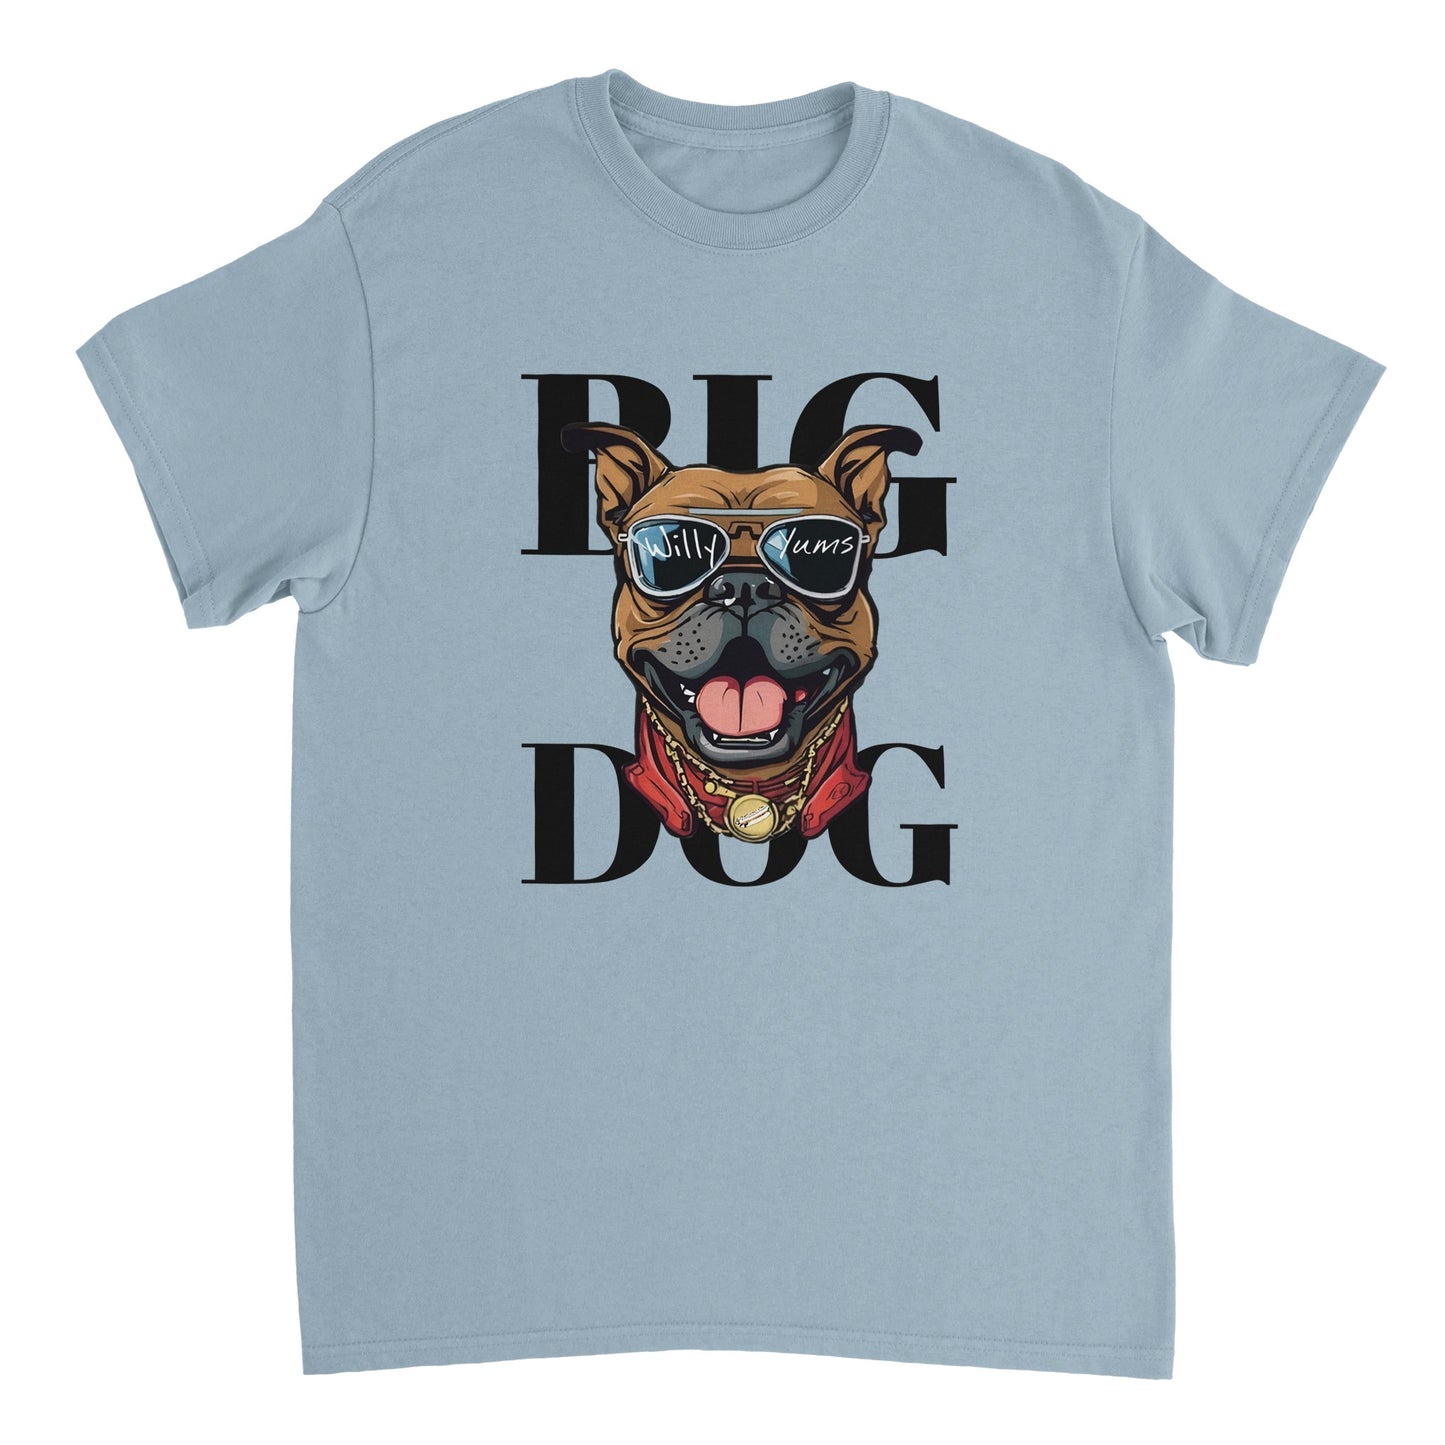 Heavyweight Unisex Crewneck T-shirt "Big Dog"